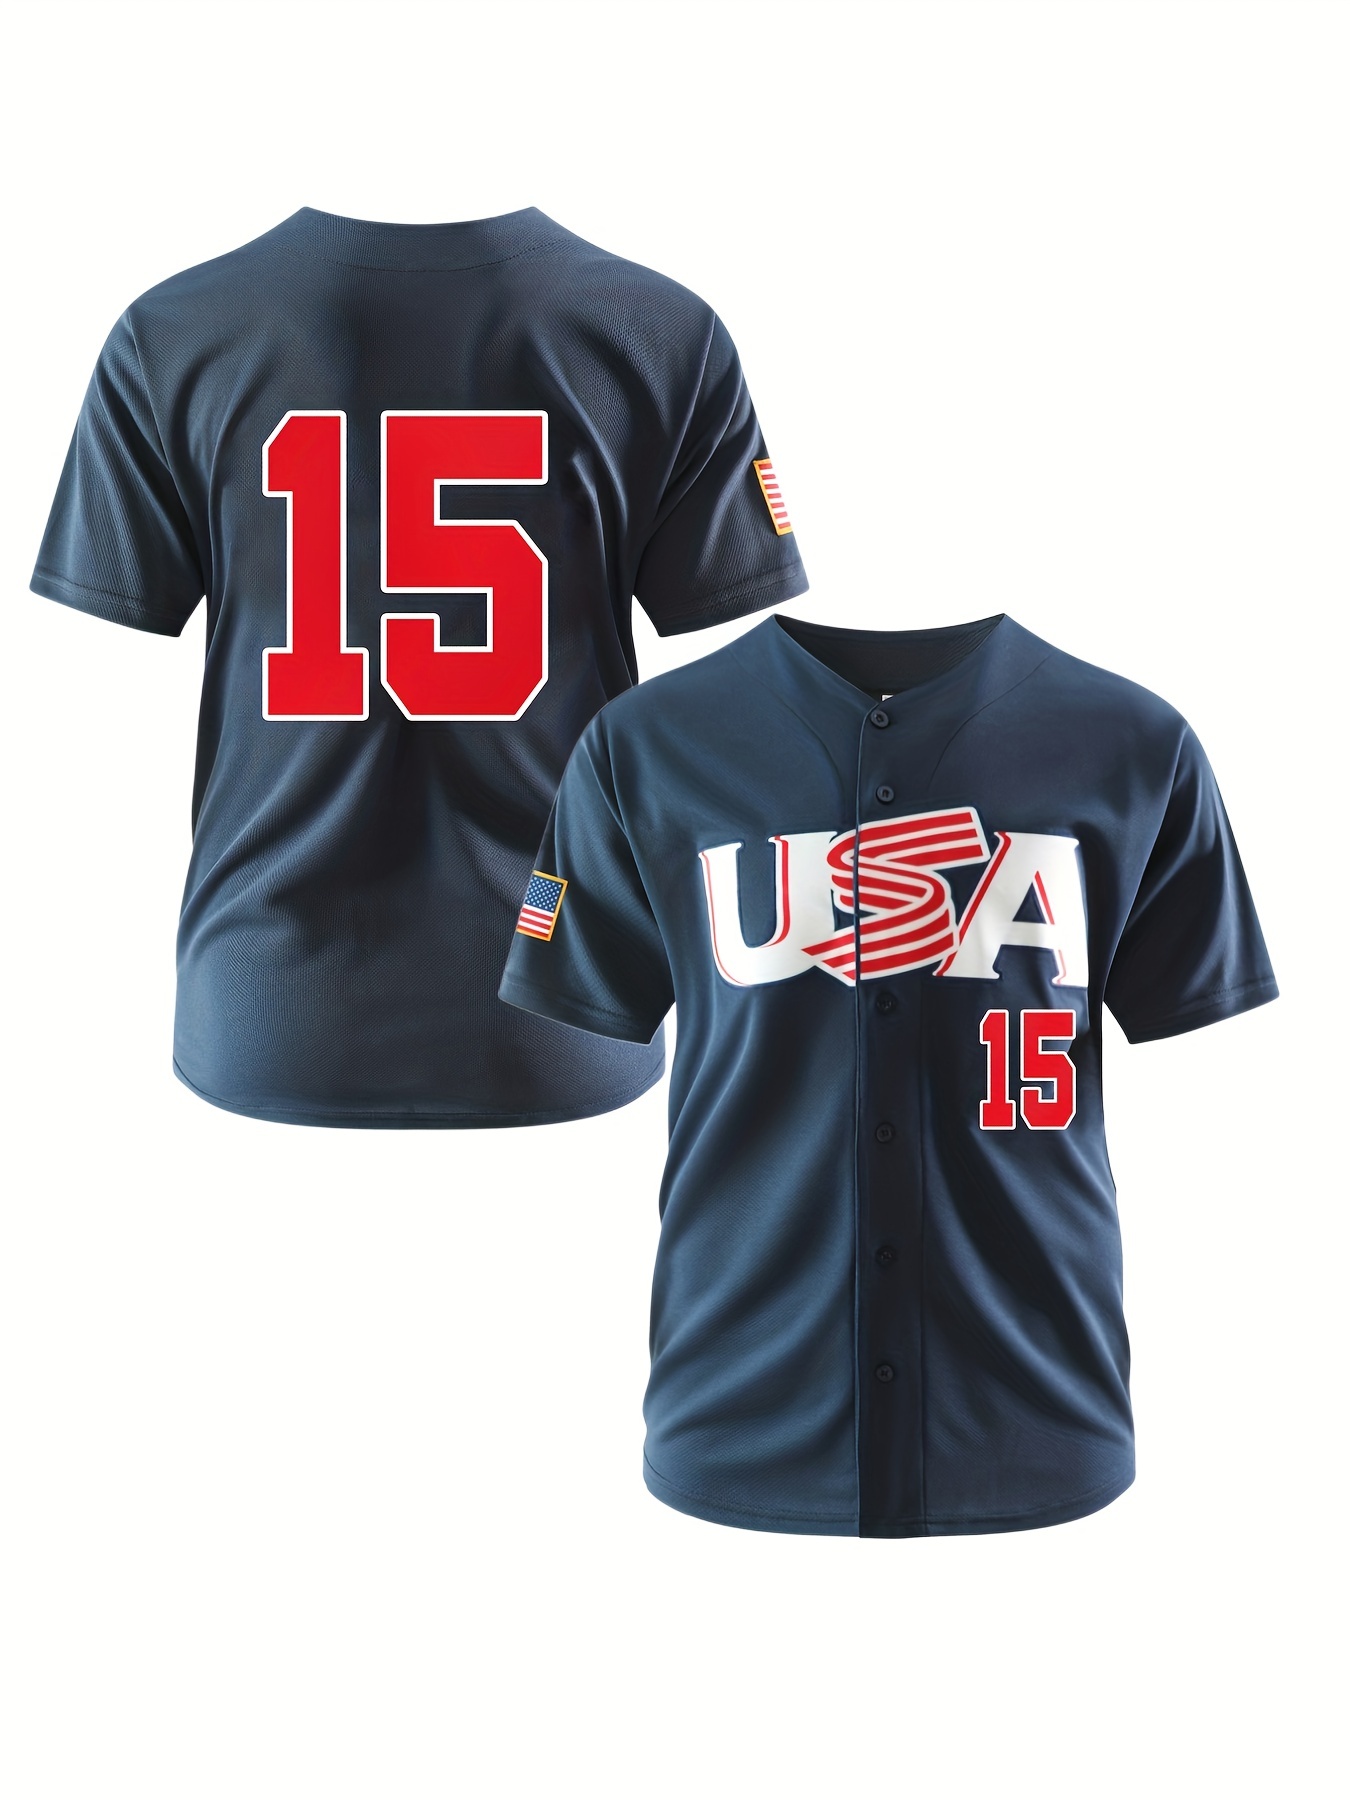 Men's #15 Usa Baseball Jersey, Retro Classic Baseball Shirt